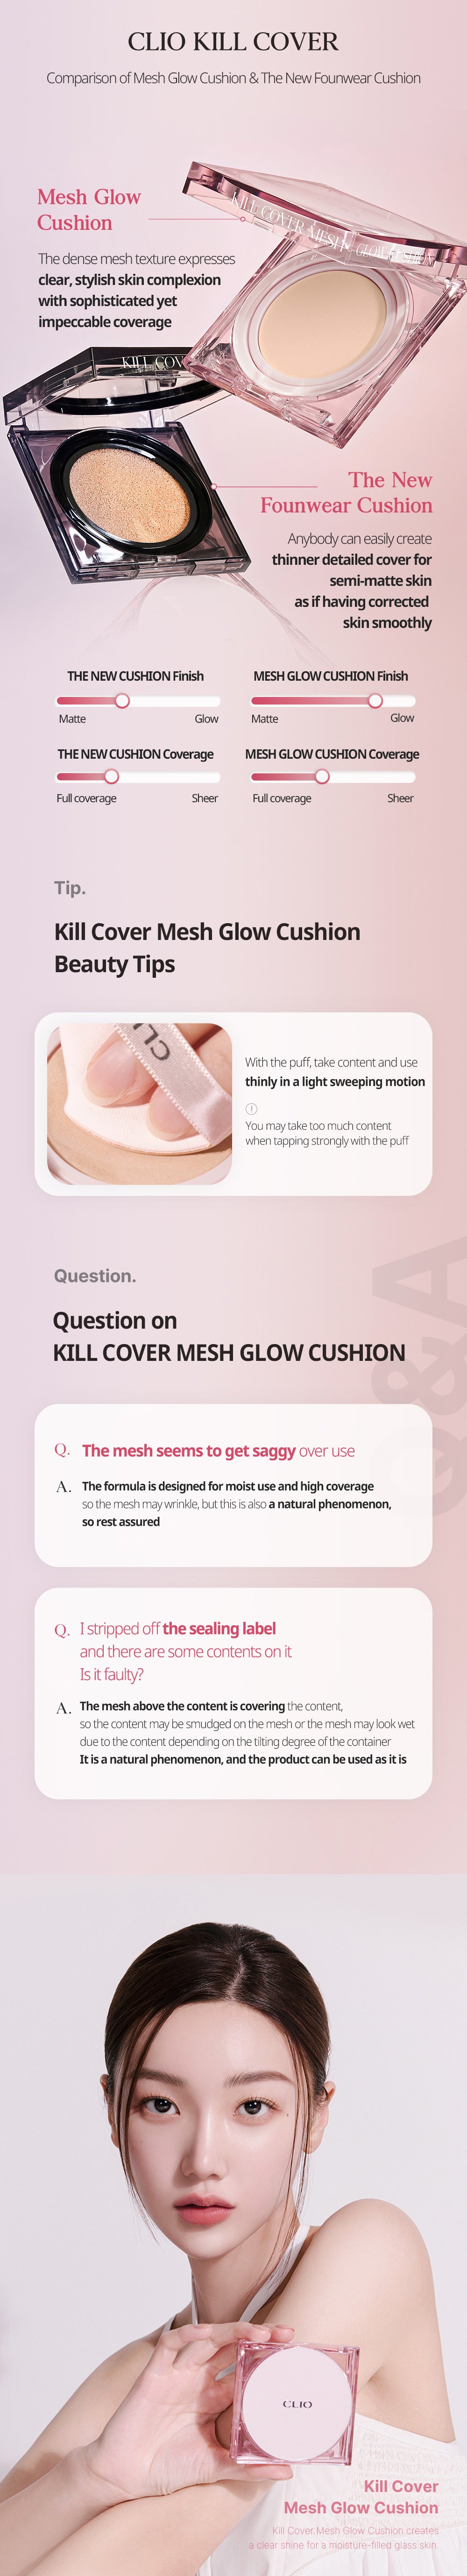 CLIO Kill Cover Mesh Glow Cushion + Refill